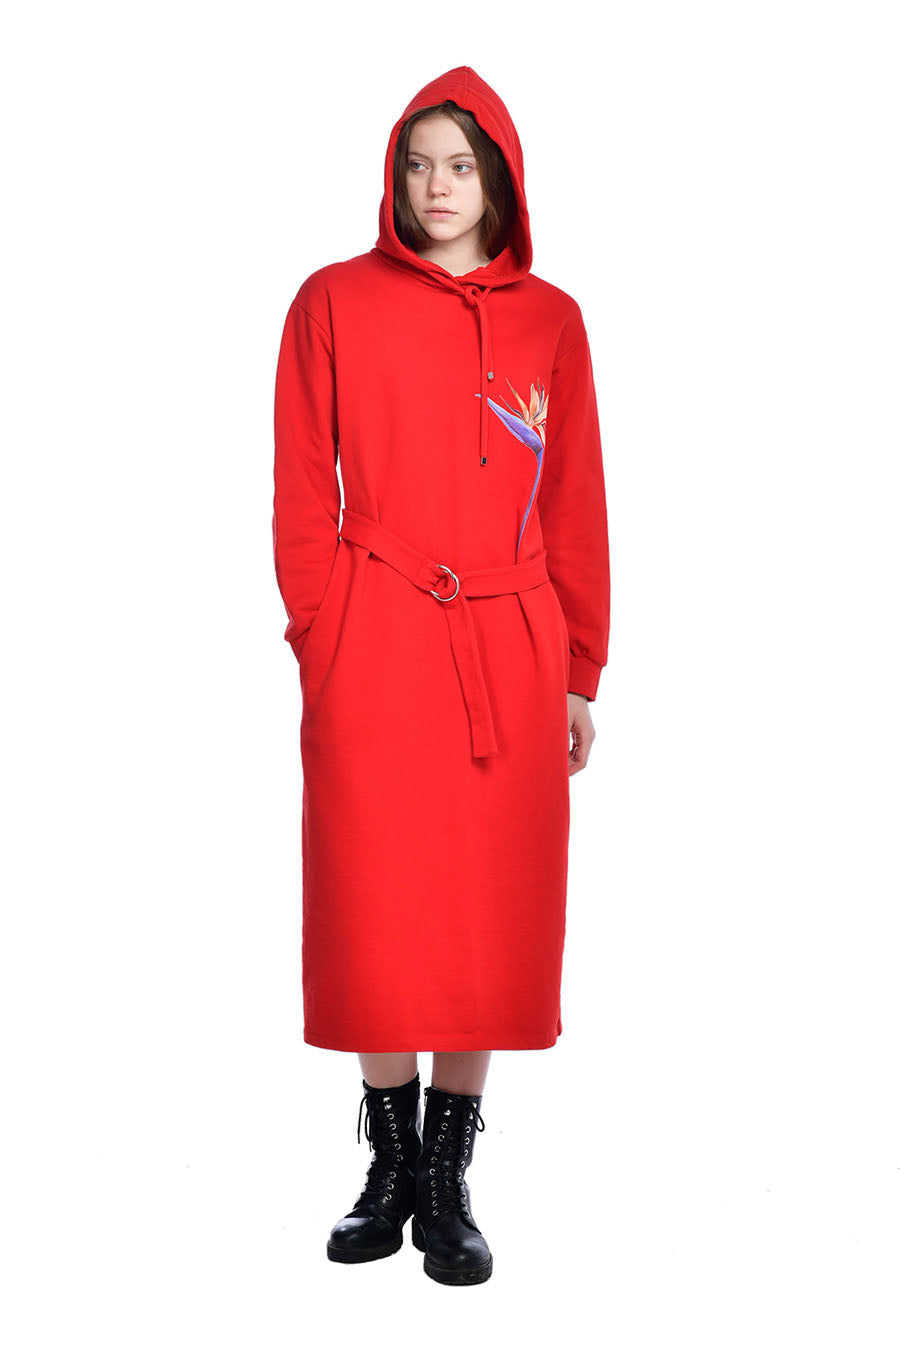 Model Wearing Hoodie Dress - Strelitzia Red